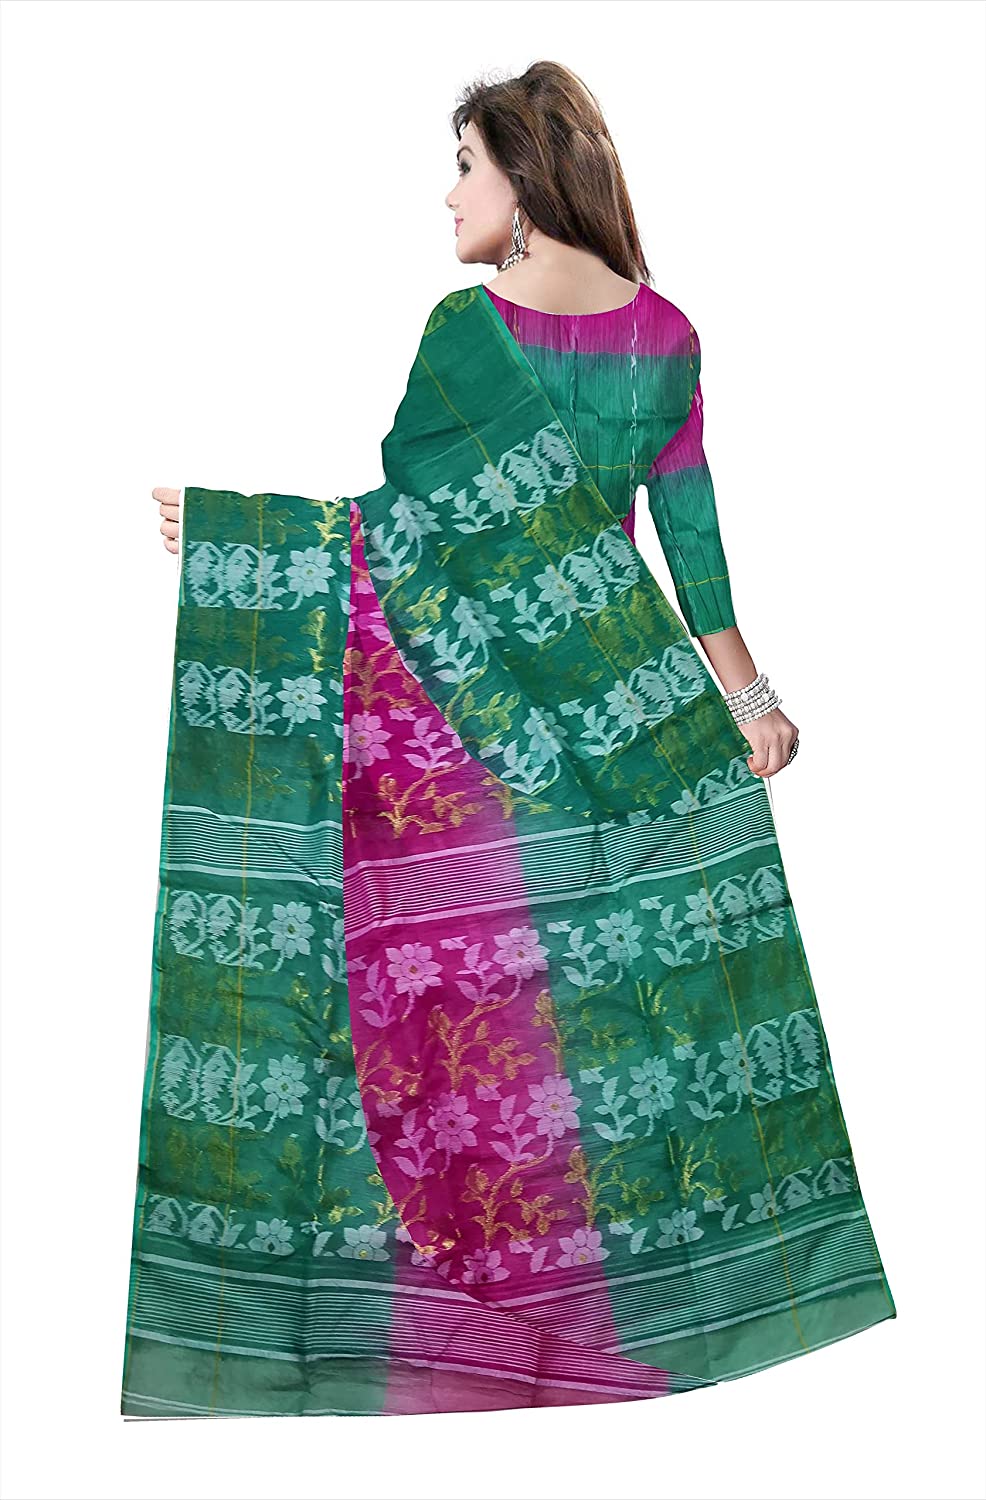 Pradip Fabrics Ethnic Women's Cotton Tant Gap Jamdani Sea Green and Pink Color Saree